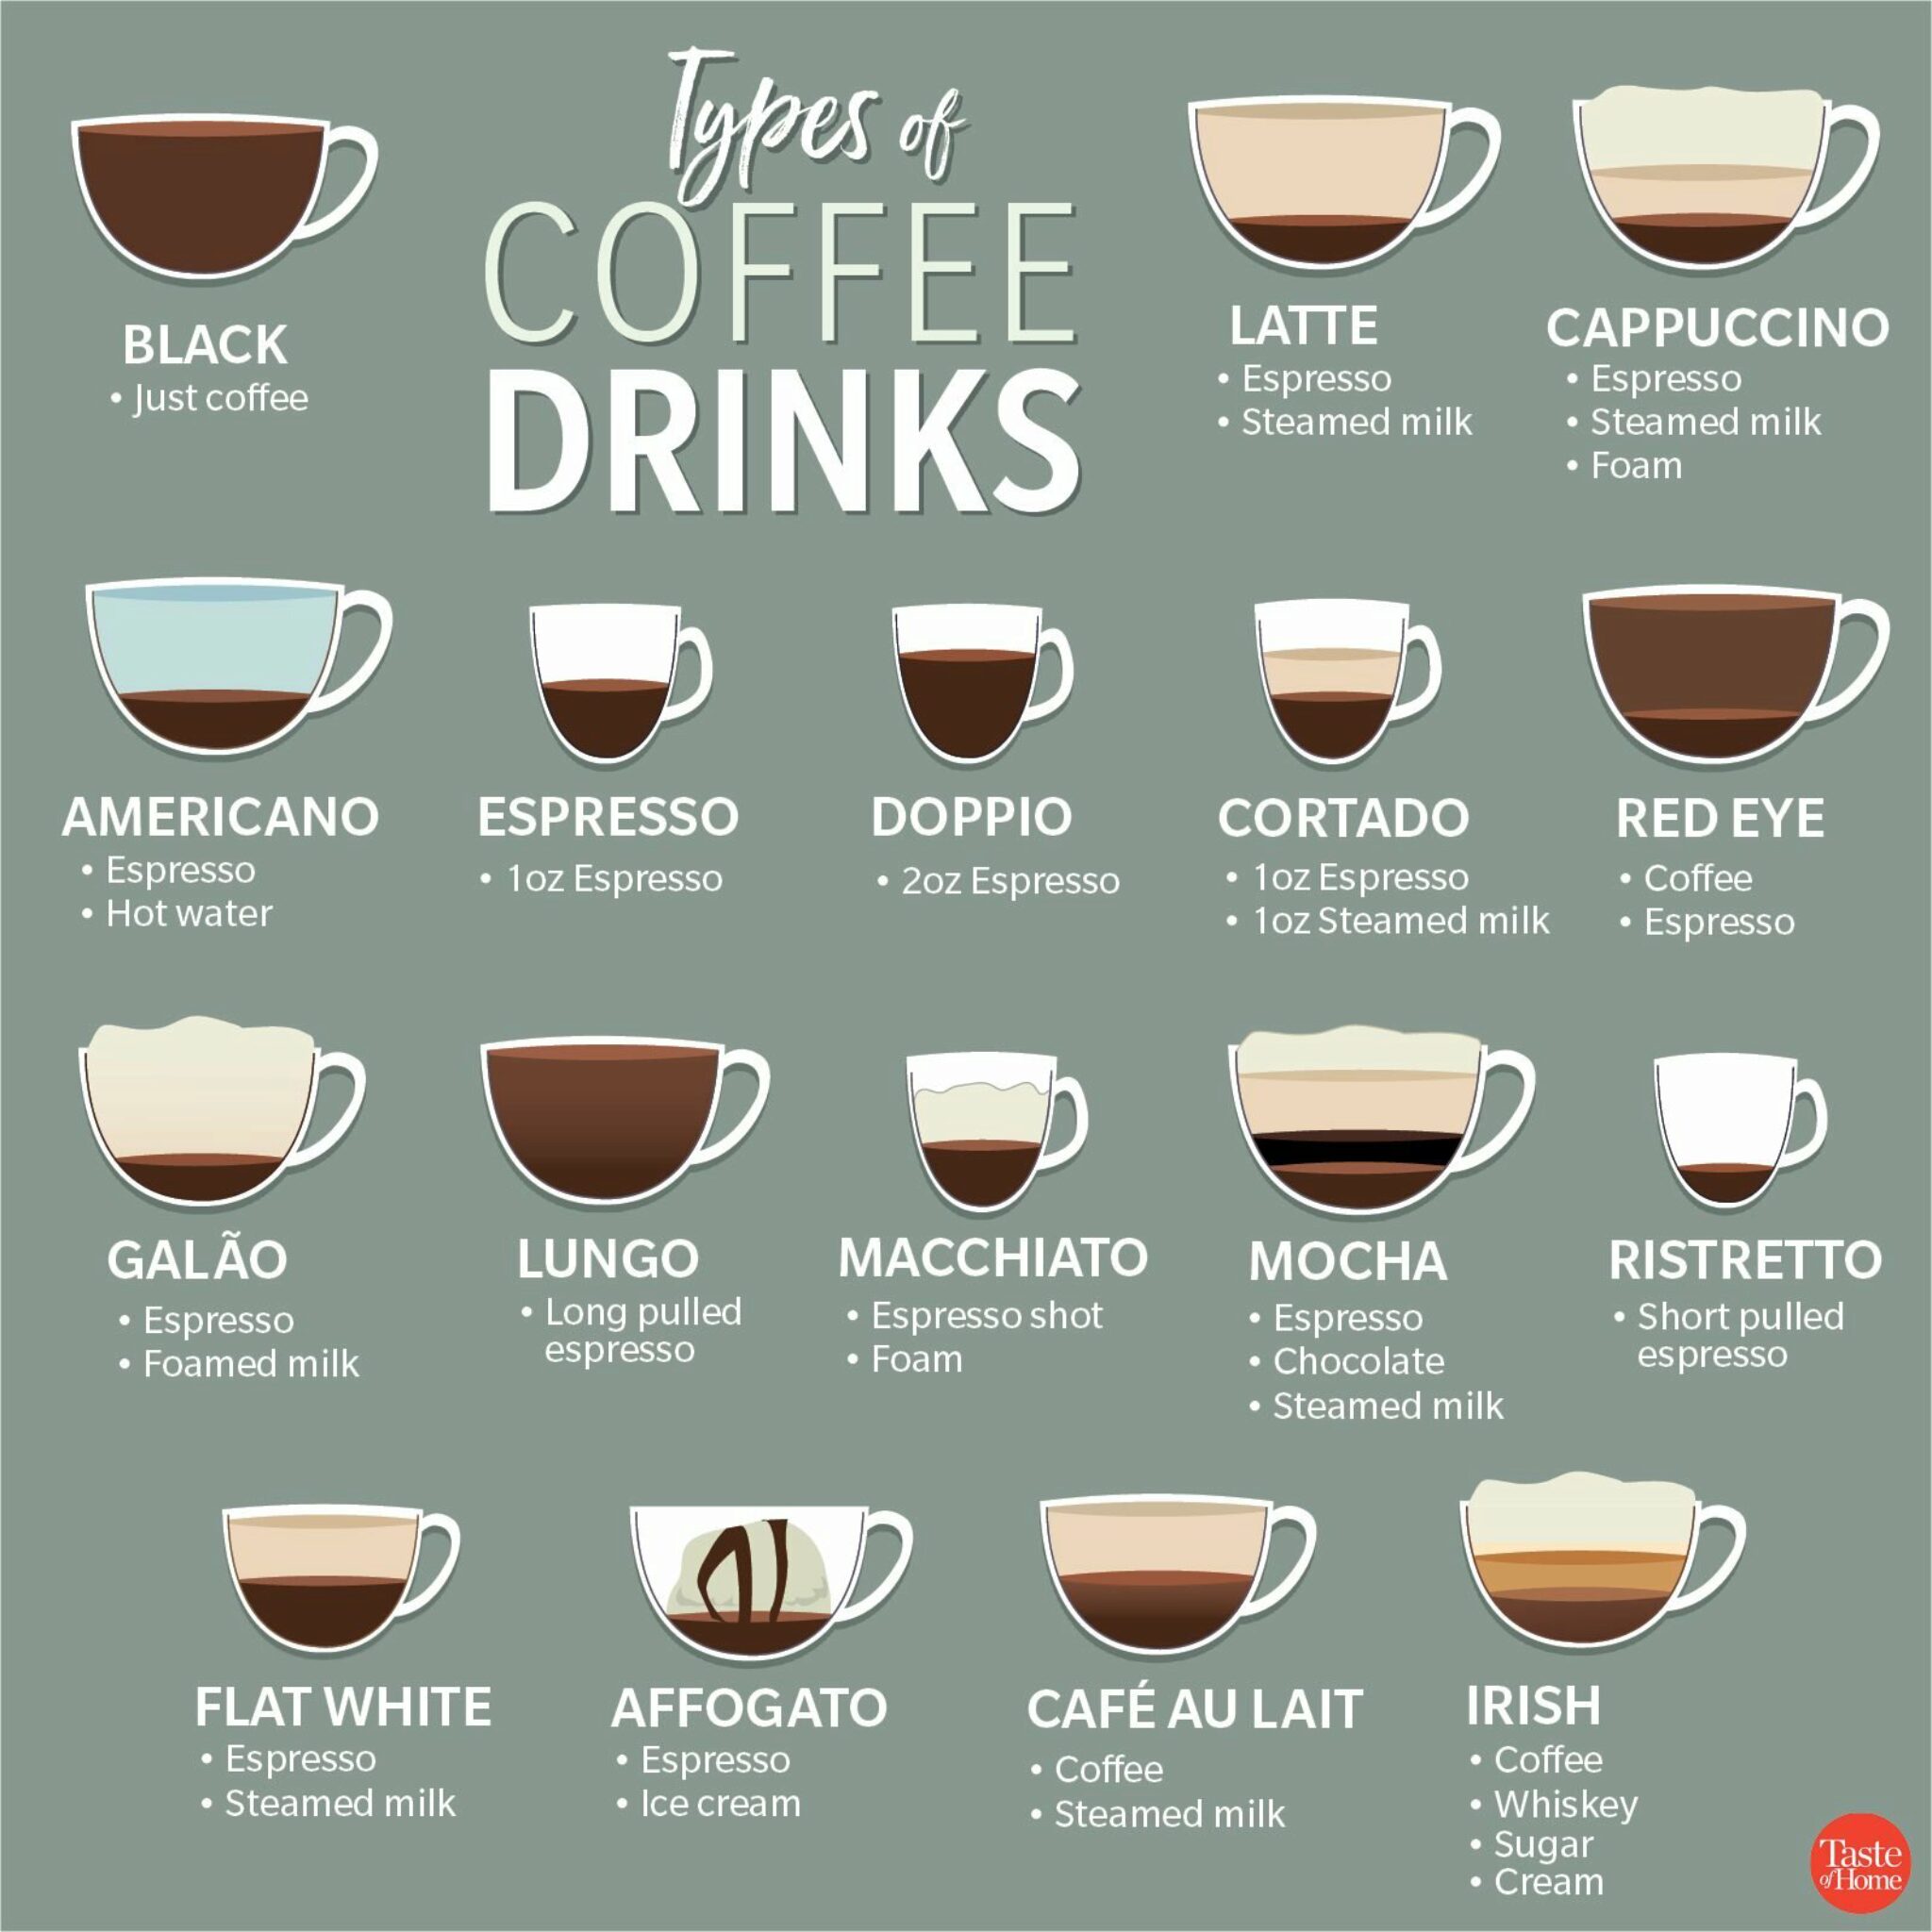 Espresso Contre Latte. Quelle Est La Difference